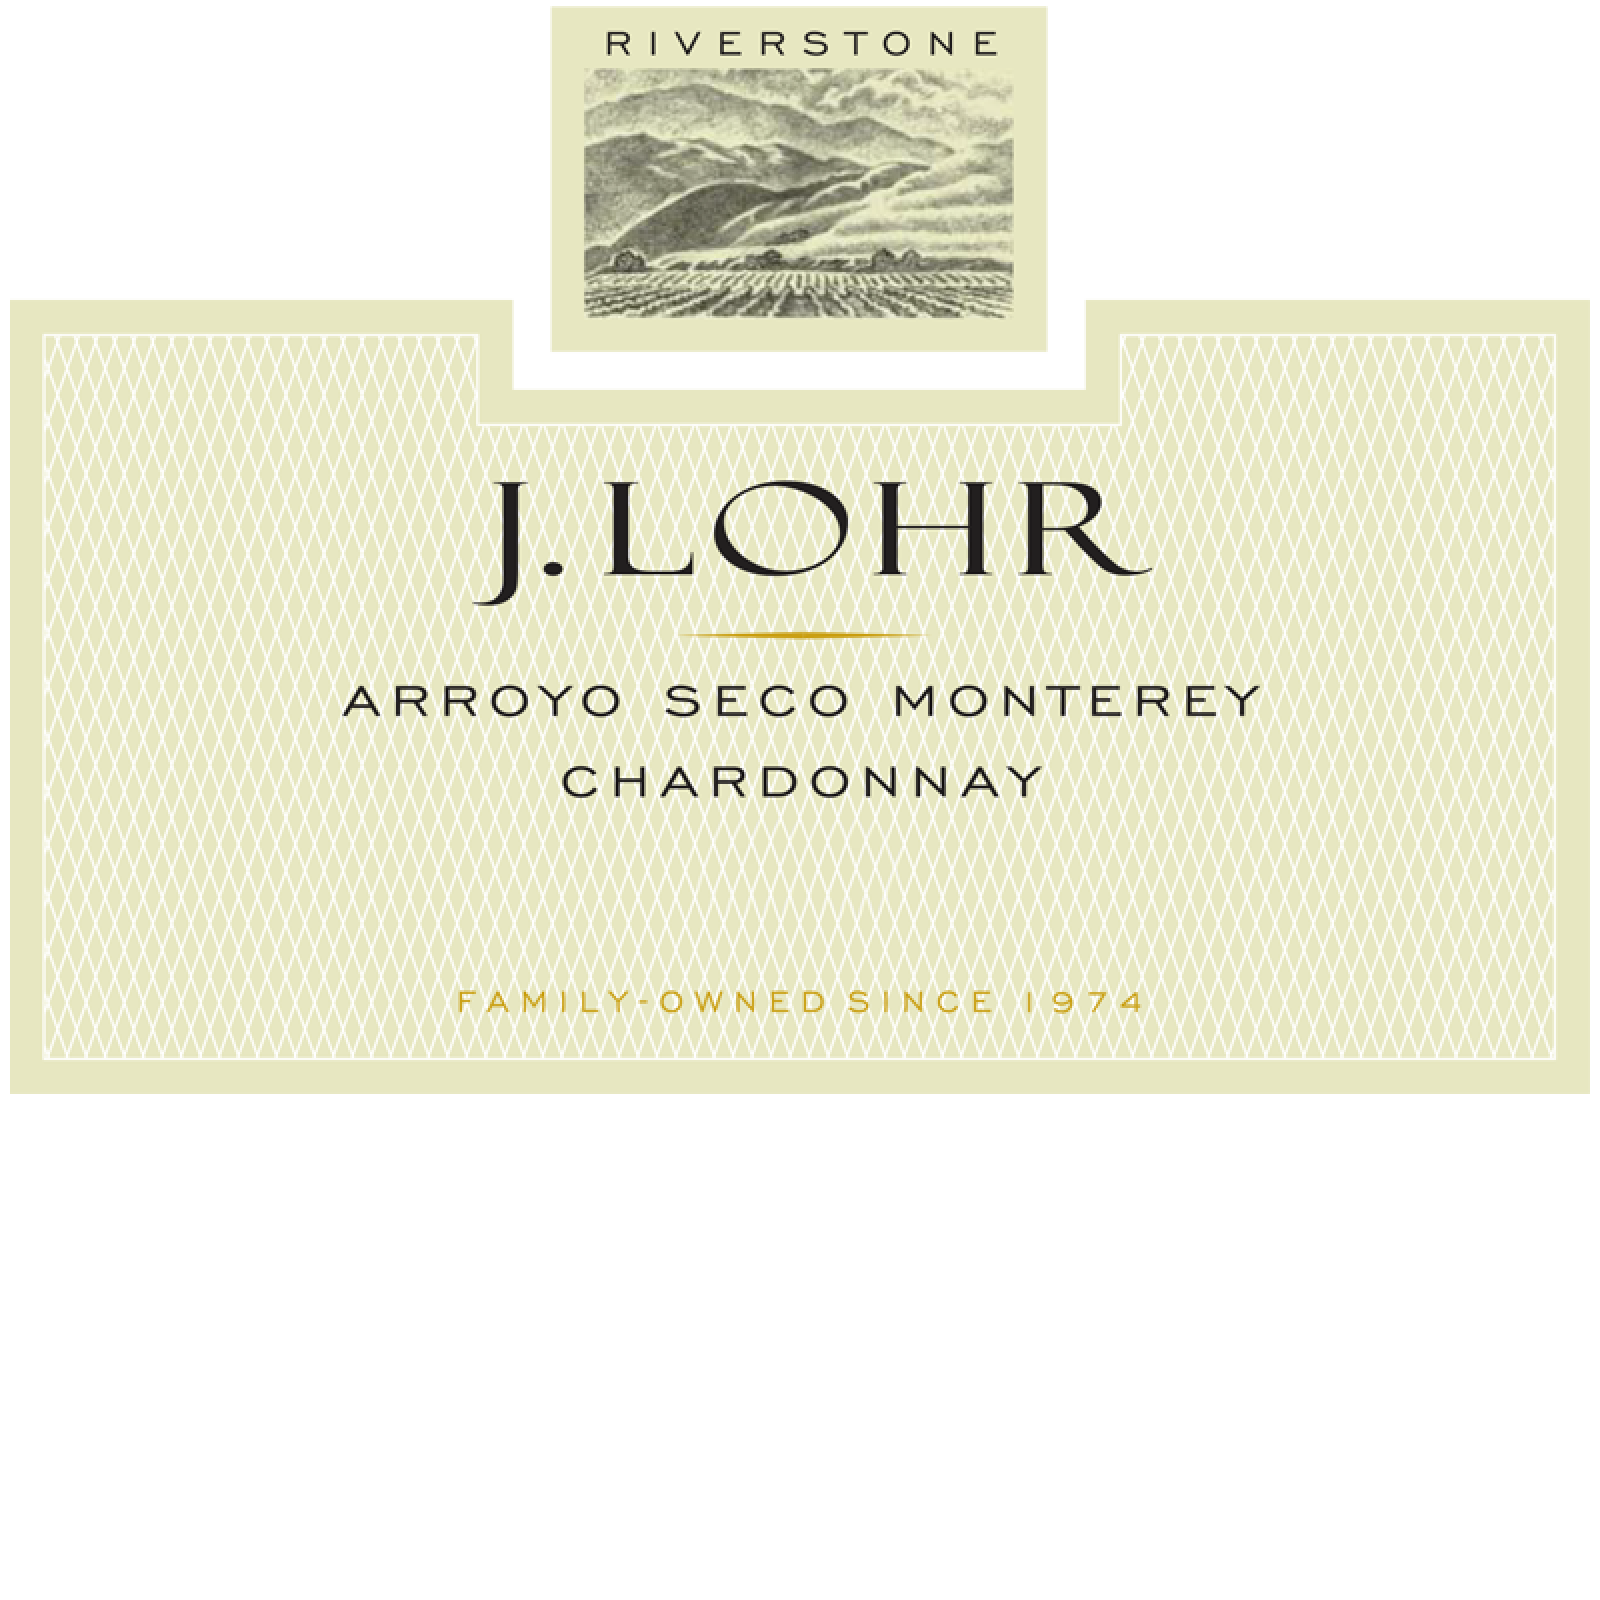 J Lohr Riverstone Arroyo Seco Chardonnay